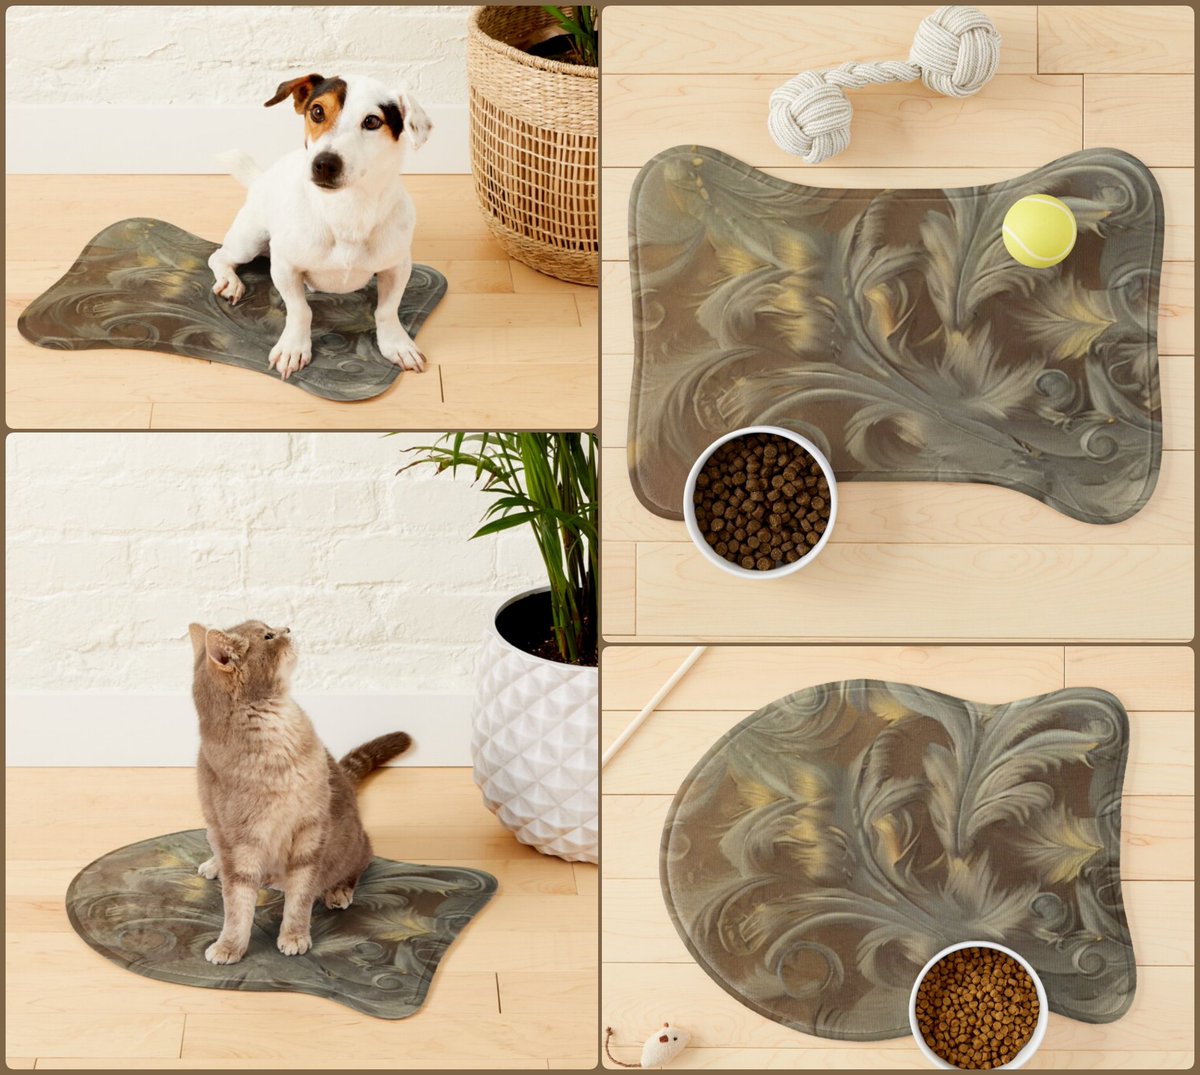 Majestic Dawn Pet Mat~by Art Falaxy
~Artful Pets~ #pets #homedecor #art #artfalaxy #cats #dogs #blankets #mats #bandanas #animals #redbubble #trendy #modern #gifts #FindYourThing

redbubble.com/i/cat-mat/Maje…